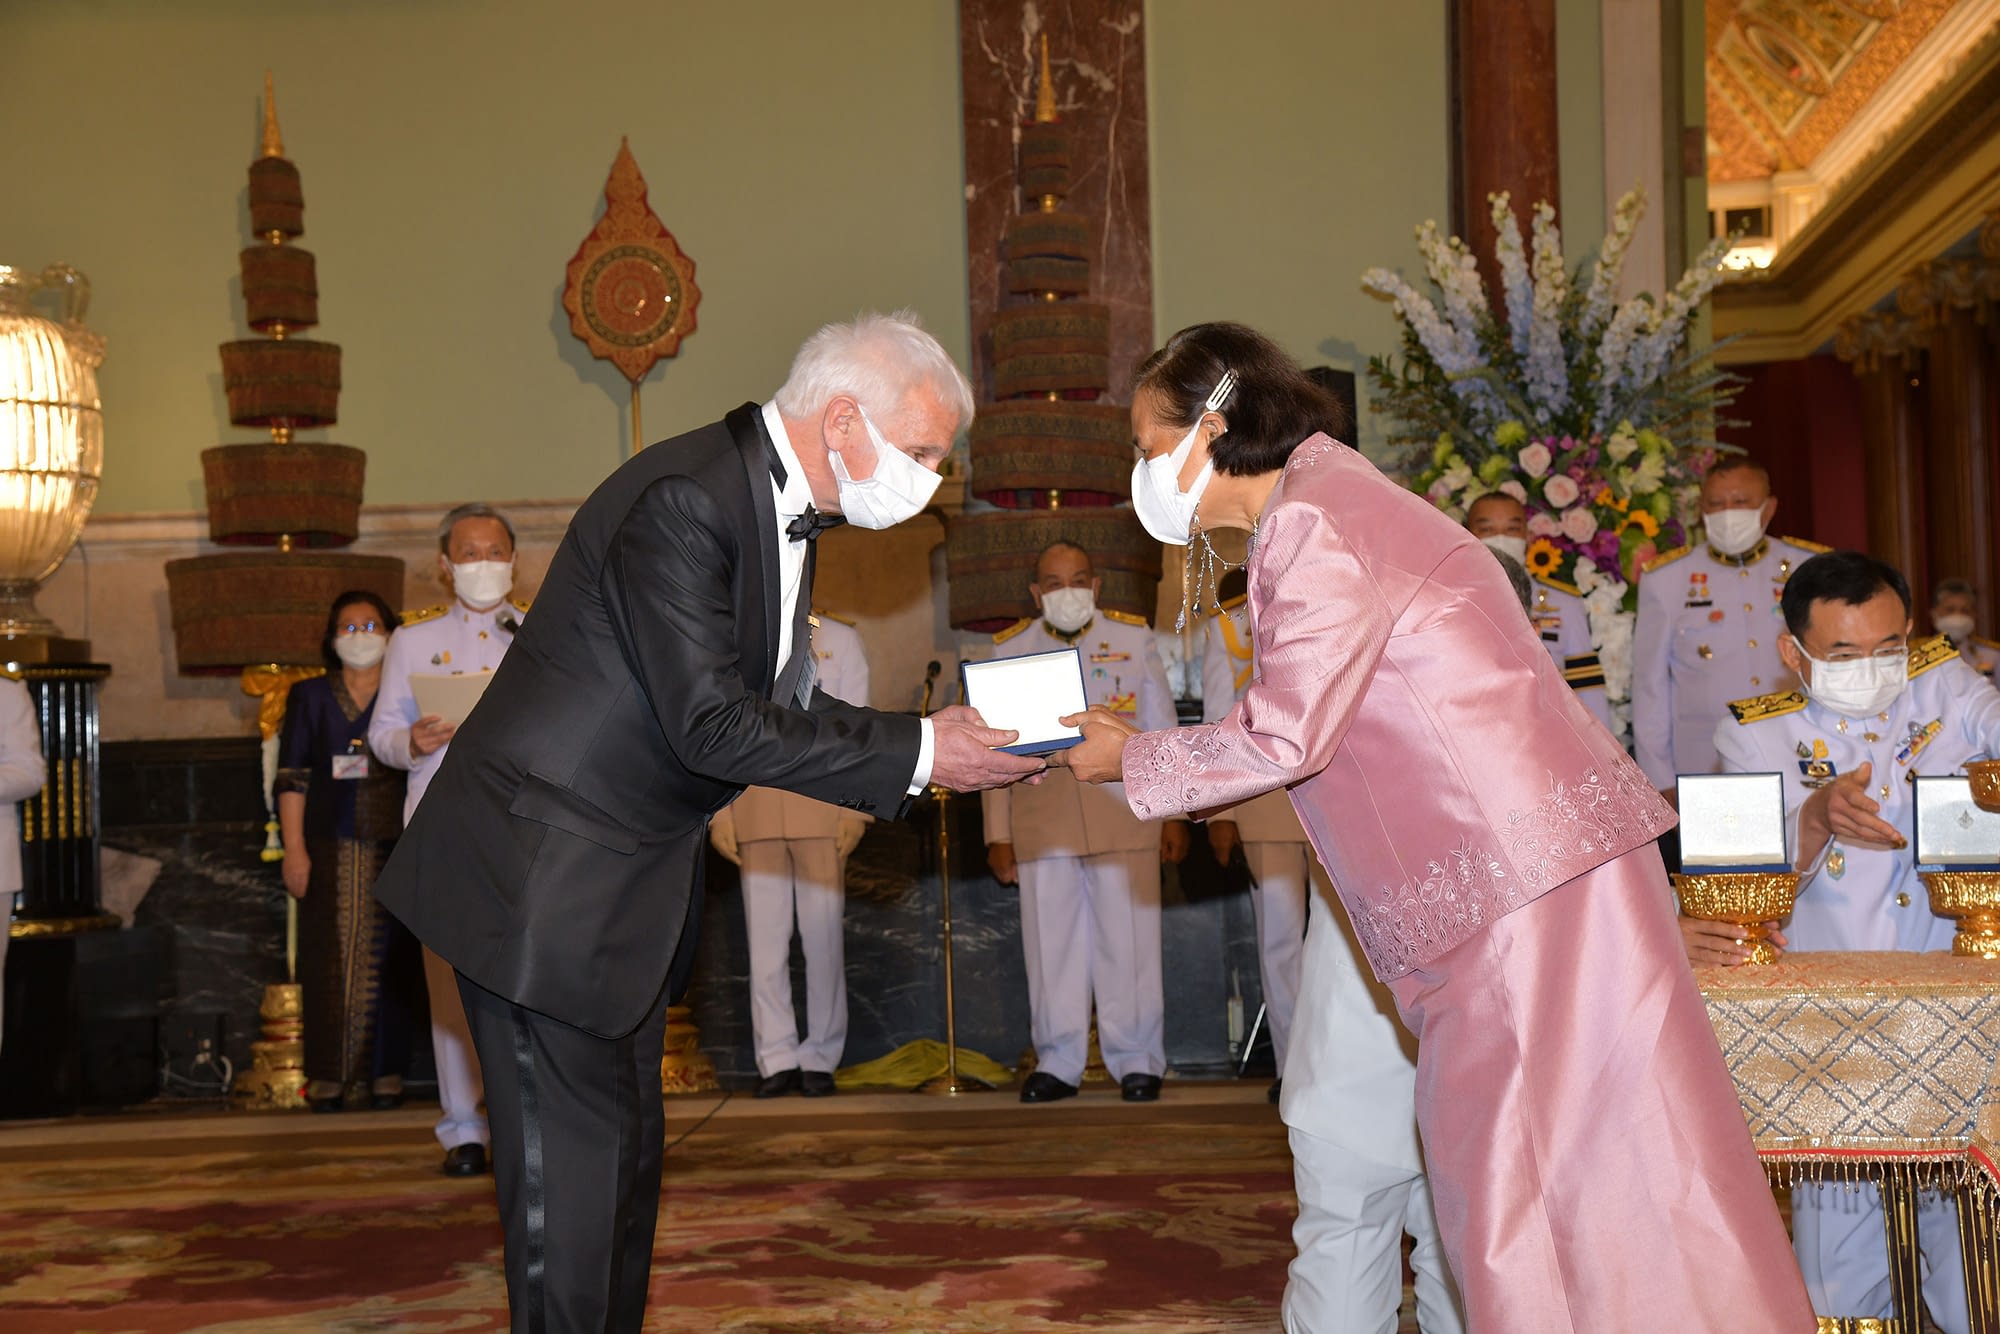 Dr. Bernard Pécoul receiving the Prince Mahidol Award from Her Royal Highness Princess Maha Chakri Sirindhorn at the Grand Palace, Thailand